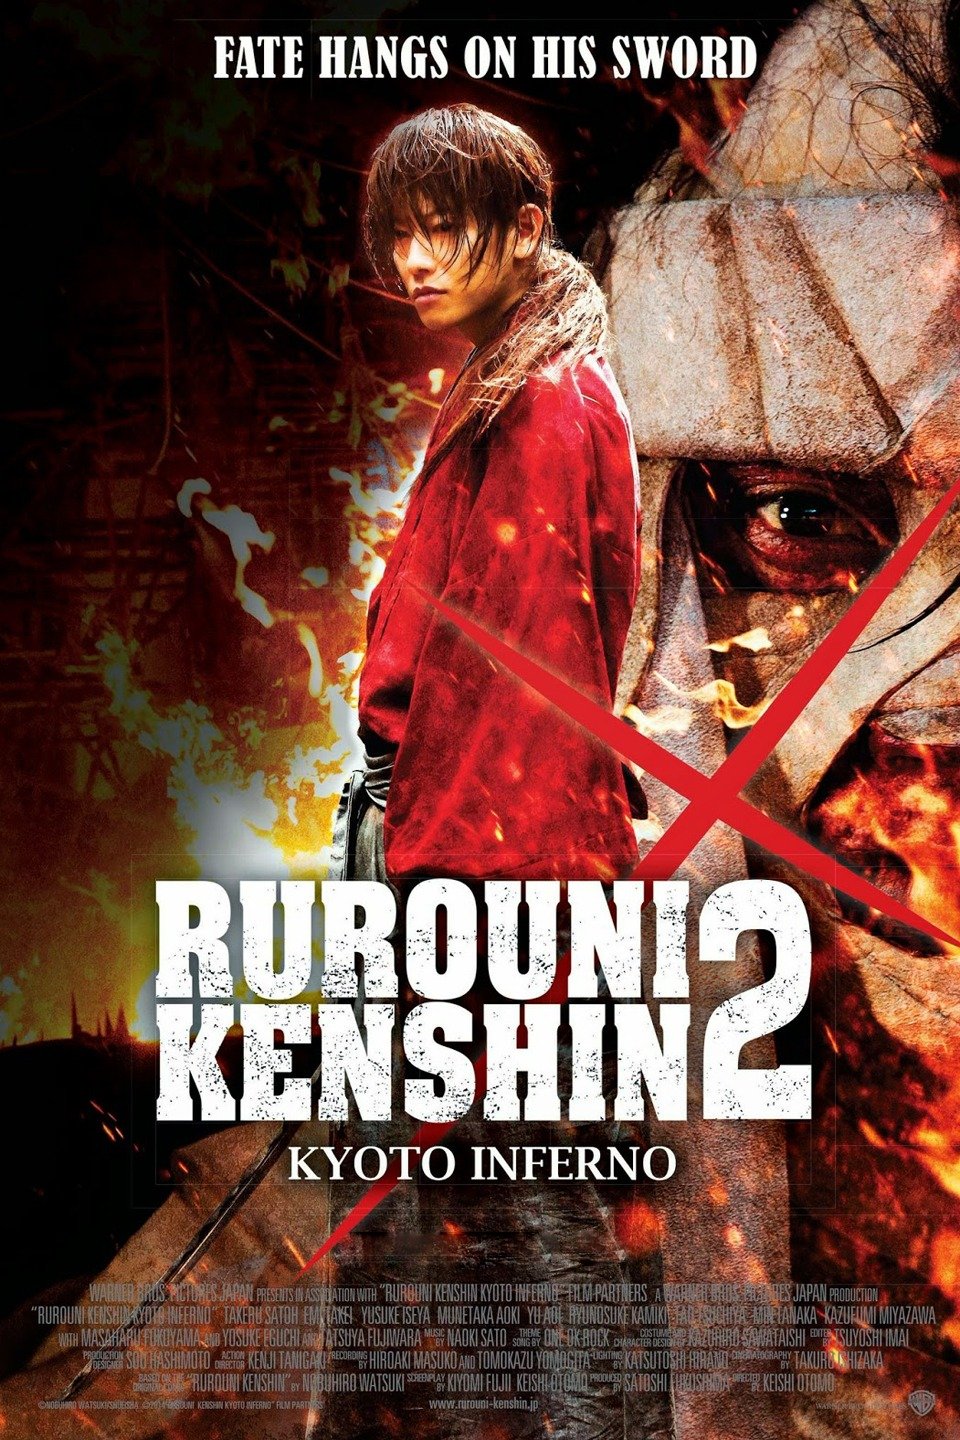 [MINI Super-HQ] Rurouni Kenshin 2: Kyoto Inferno (2014) รูโรนิ เคนชิน เกียวโตทะเลเพลิง ภาค 2 [1080p] [พากย์ไทย 5.1 + ญี่ปุ่น DTS] [บรรยายไทย + อังกฤษ] [เสียงไทย + ซับไทย] [ONE2UP]